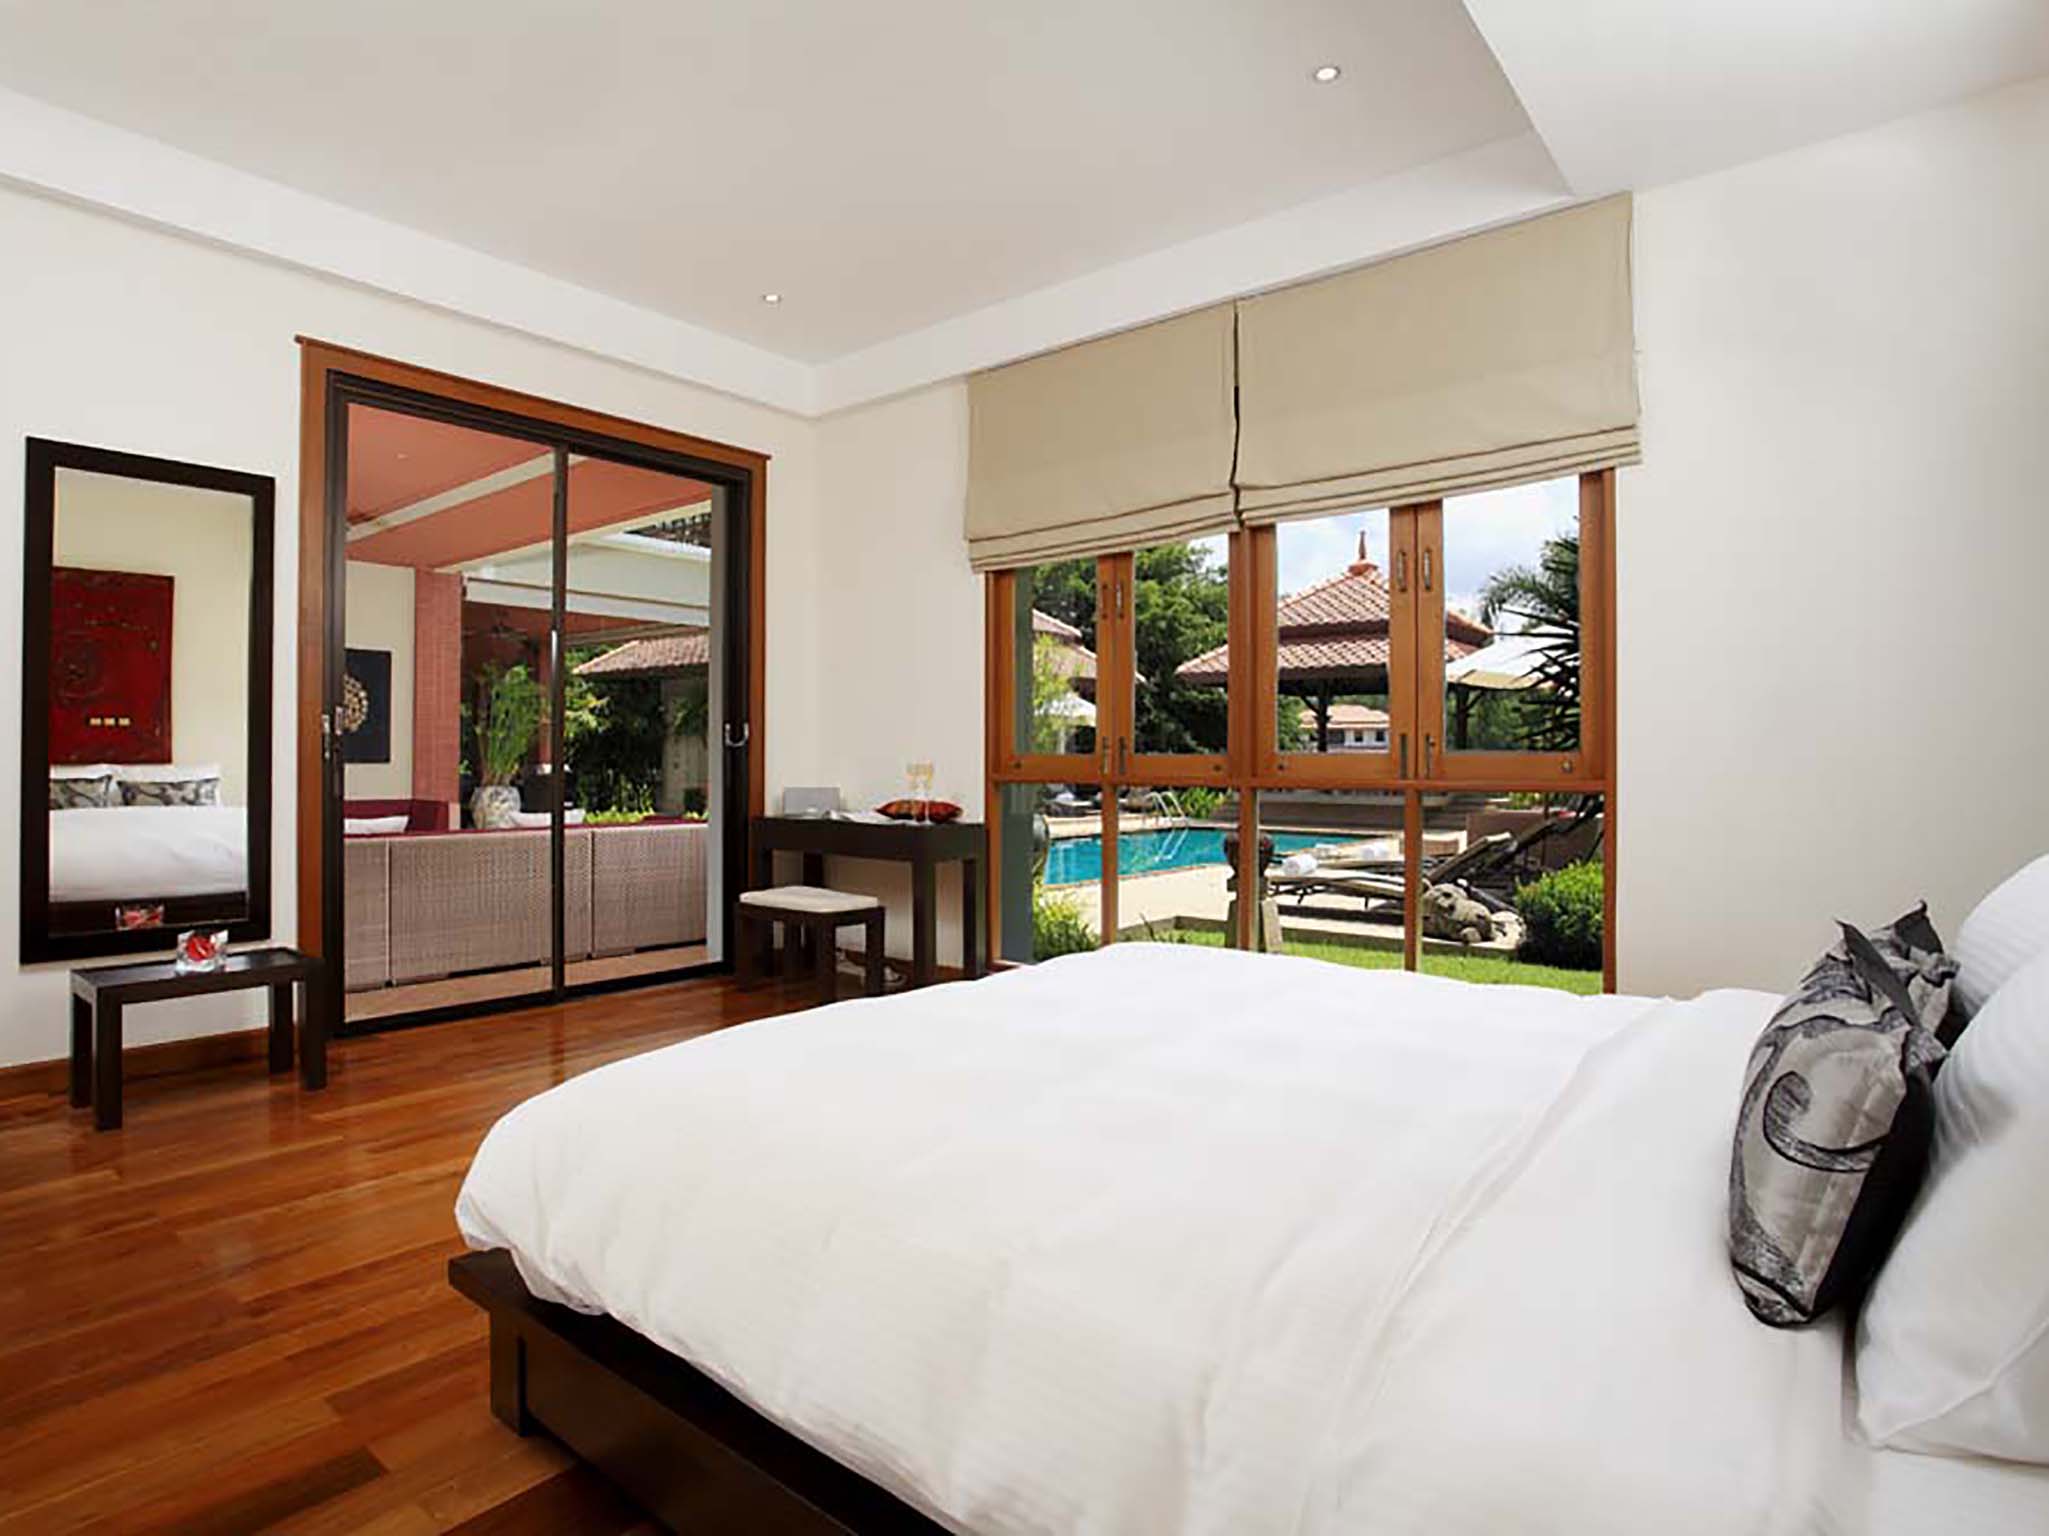 6. laguna waters guest bedroom three design